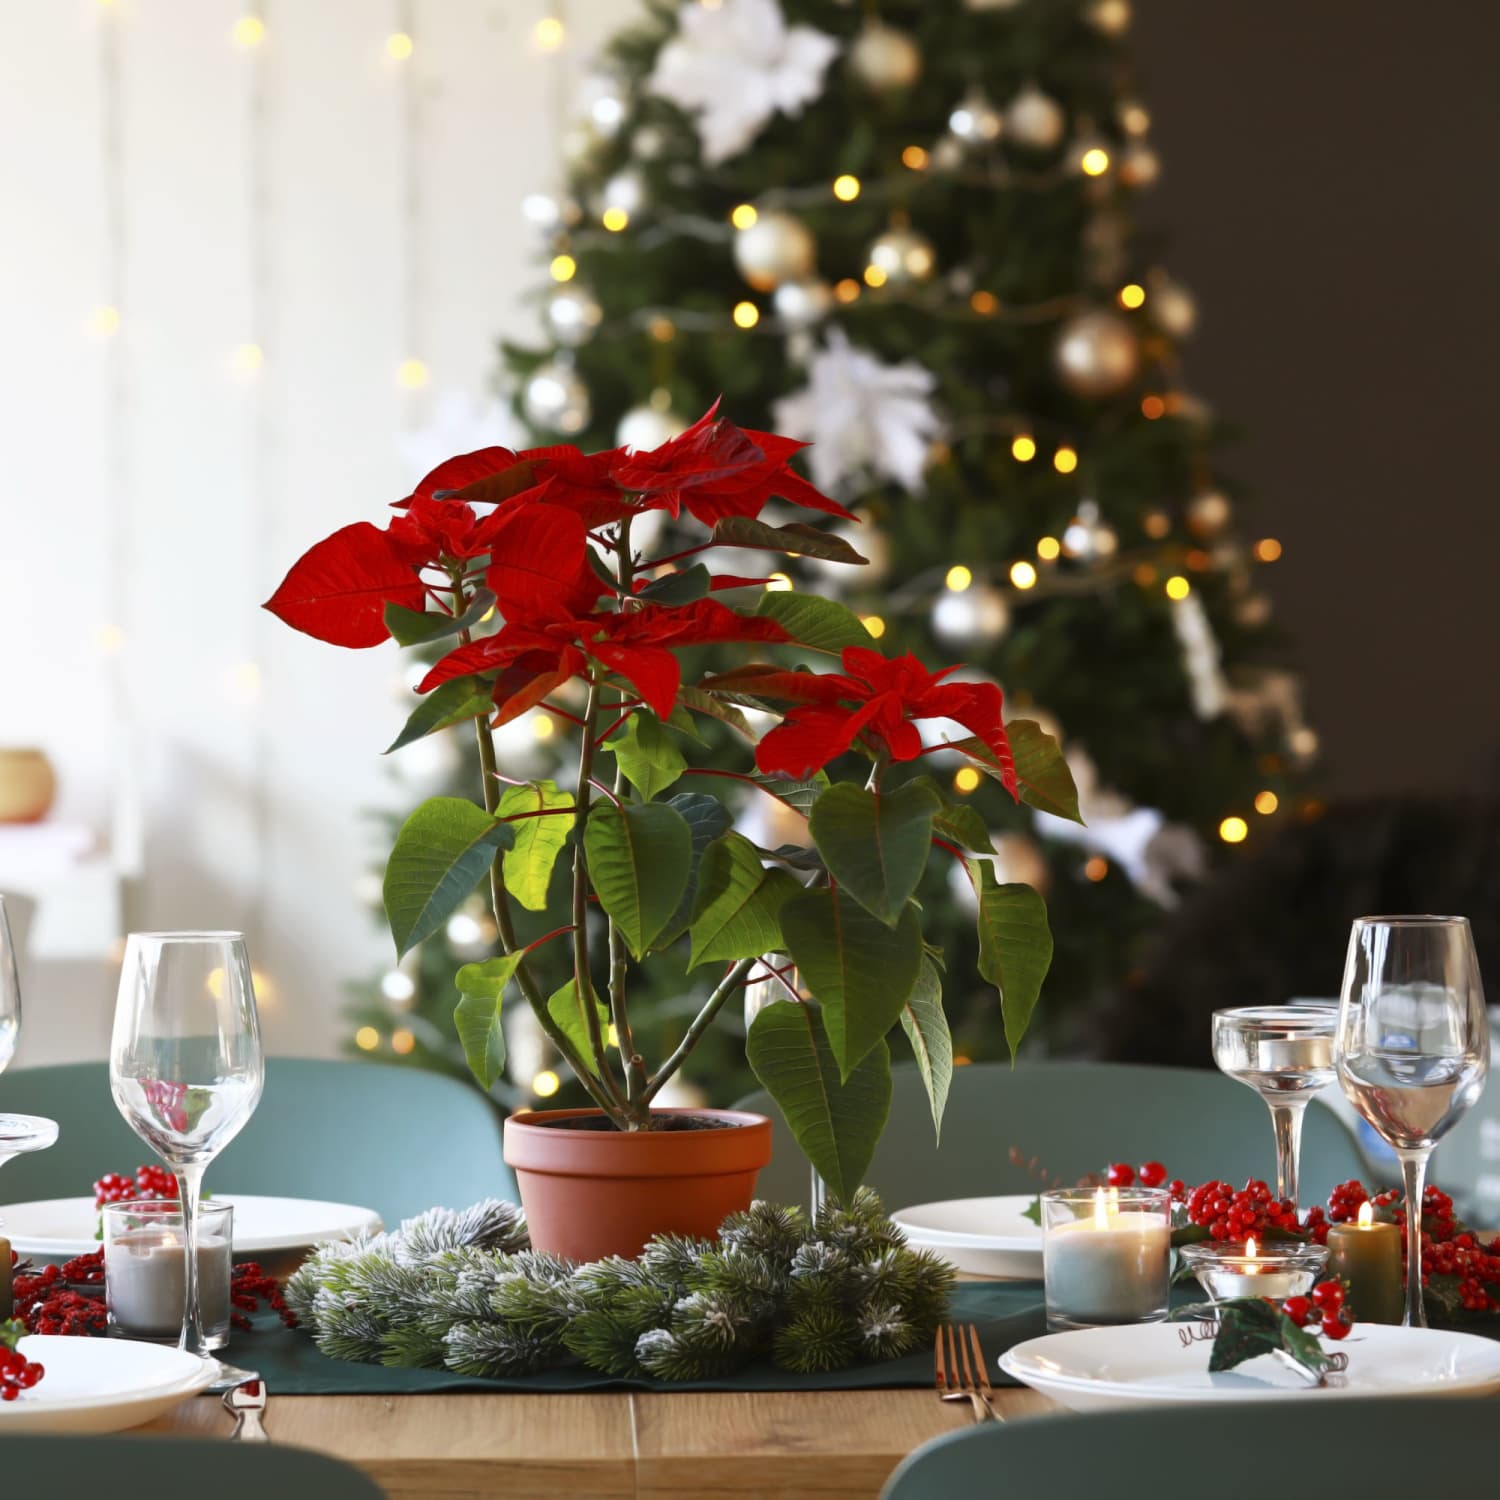 Elegant Christmas Tree with Poinsettias and Festive Decor